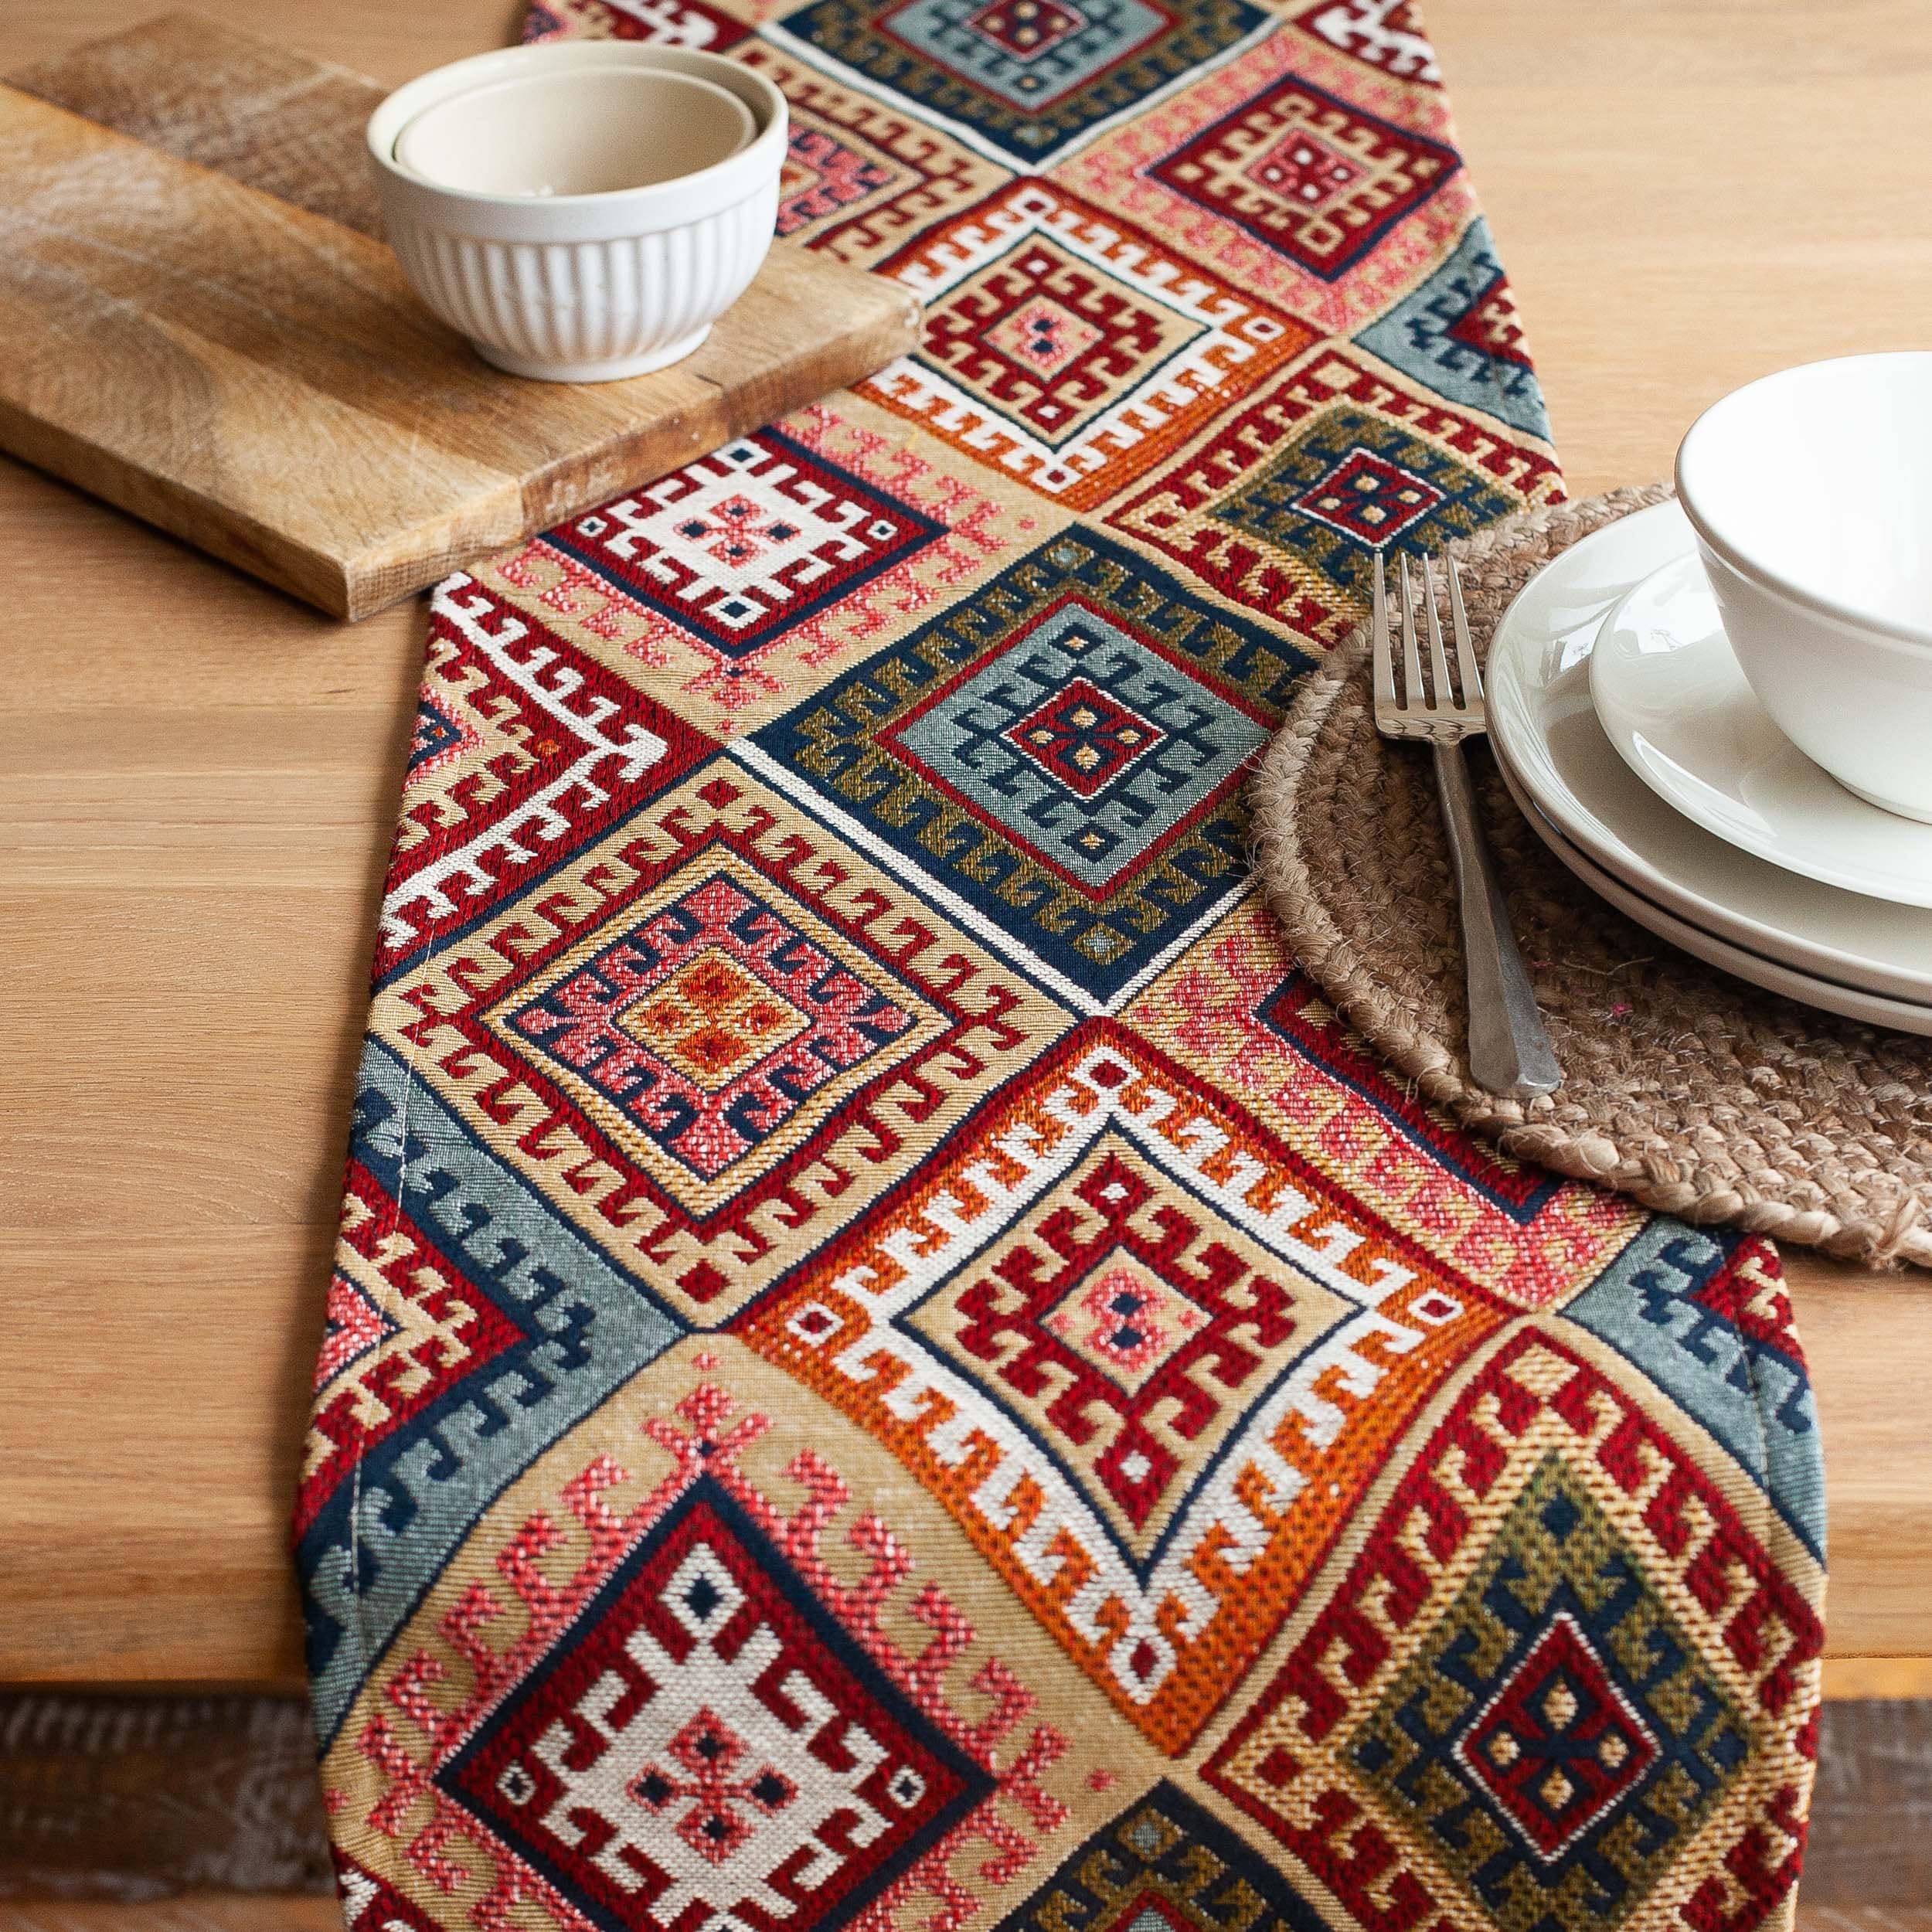 turkish kilim pattern orange table runner chenille fabric decorative table runner 17 inch x 80 inch ethnic home decor runner table runner